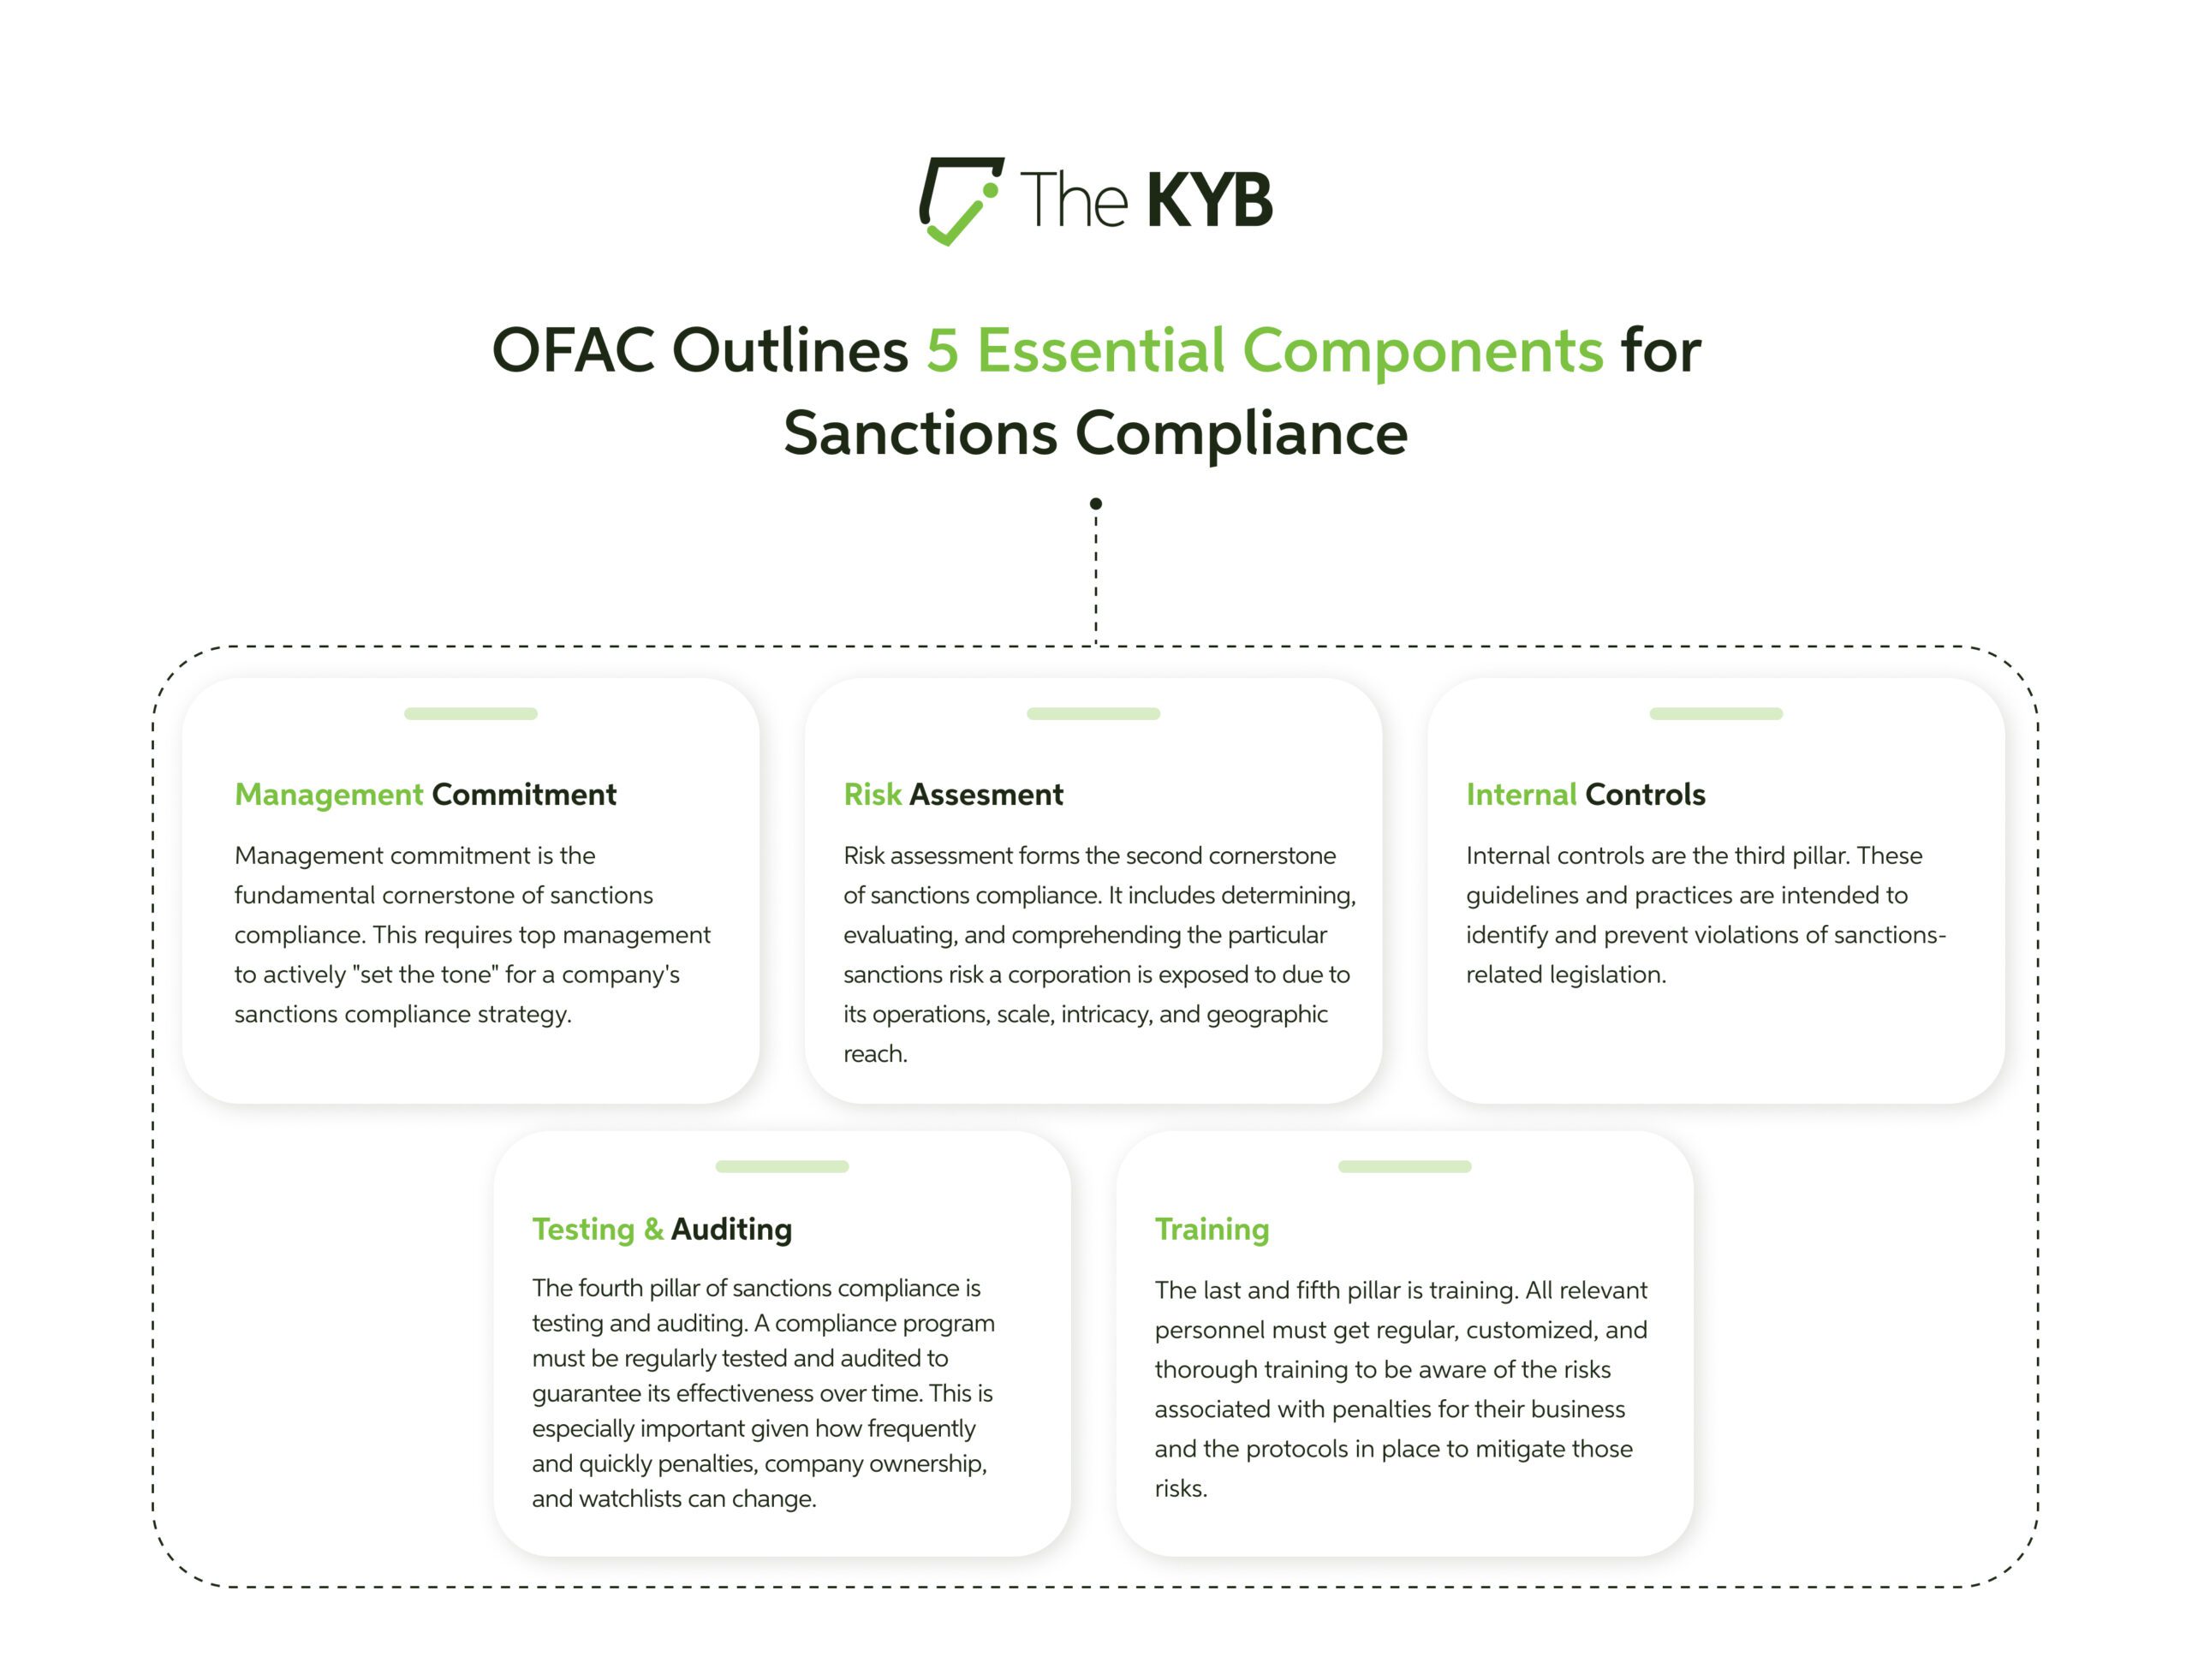 Essentials components for sanctions compliance